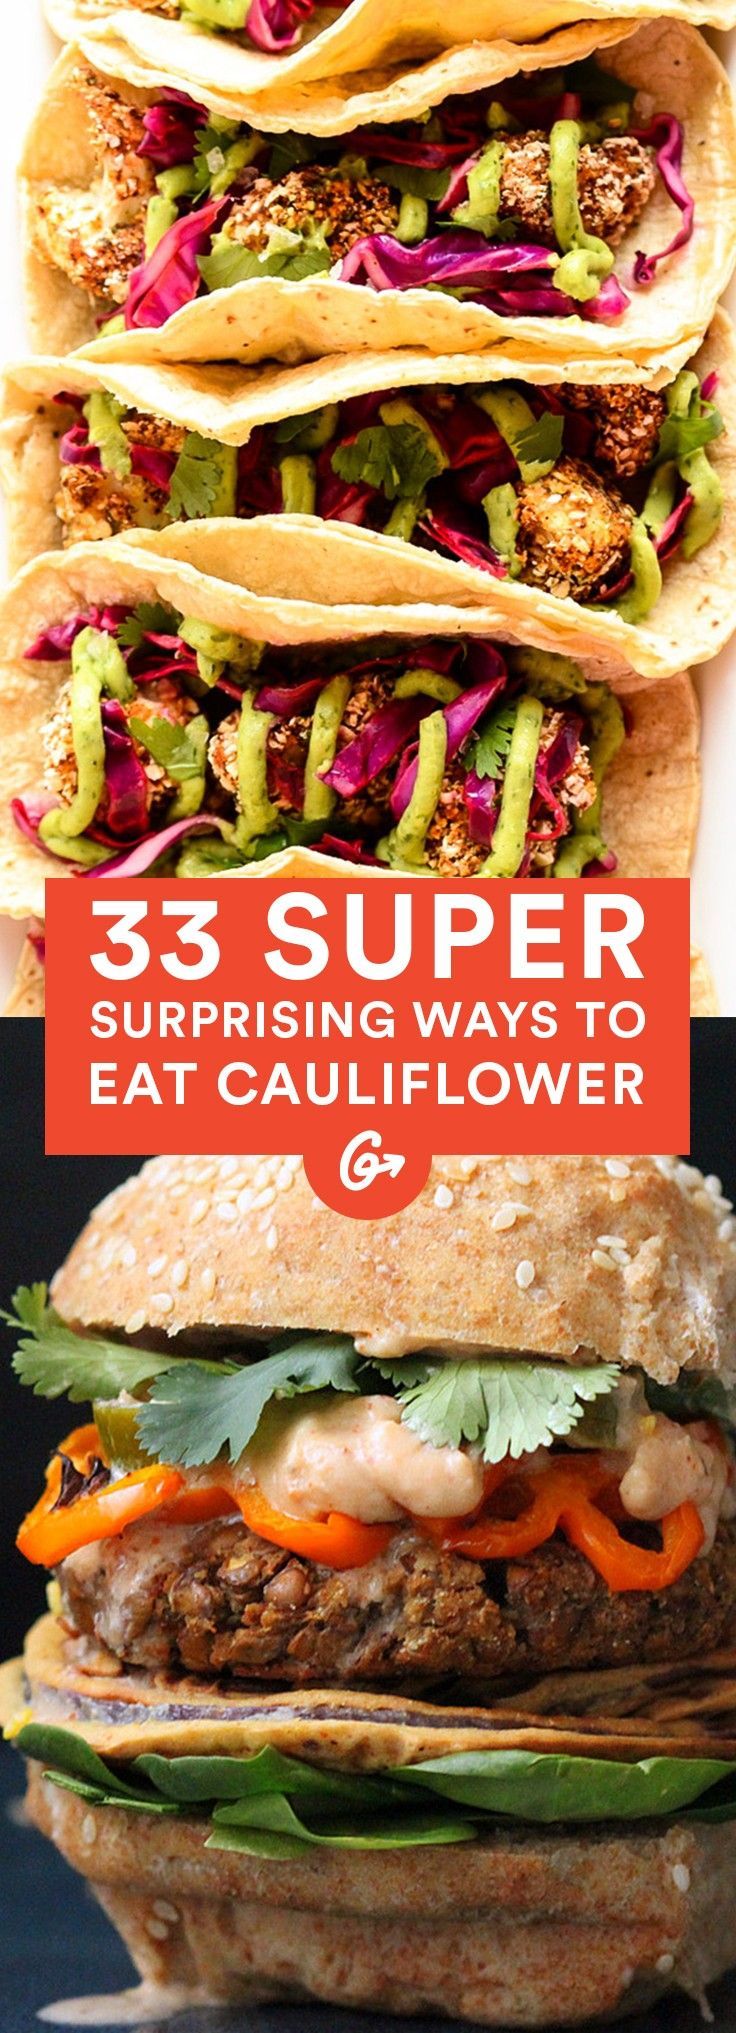 24 cauliflower recipes breakfast
 ideas